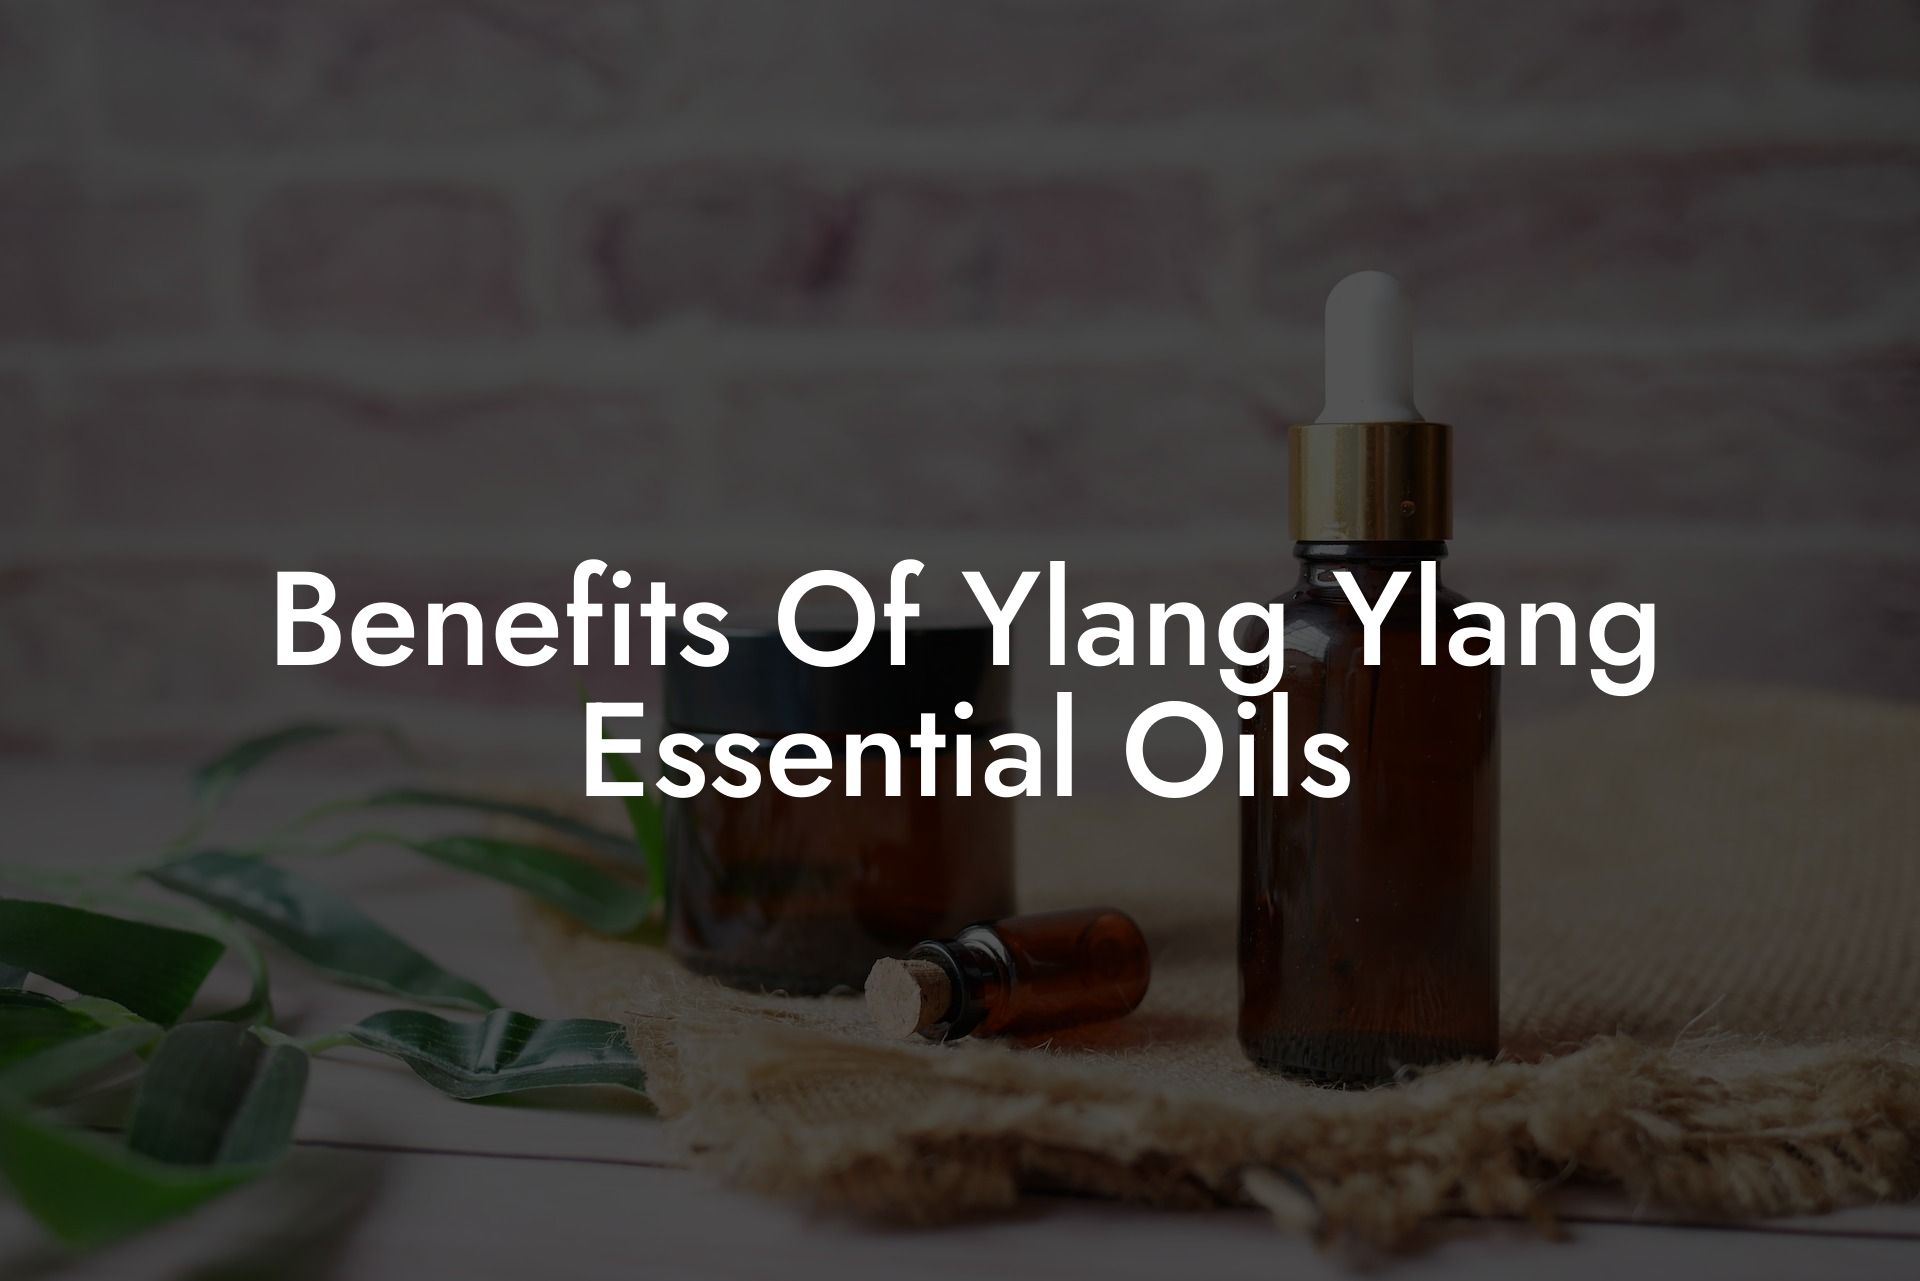 Benefits Of Ylang Ylang Essential Oils